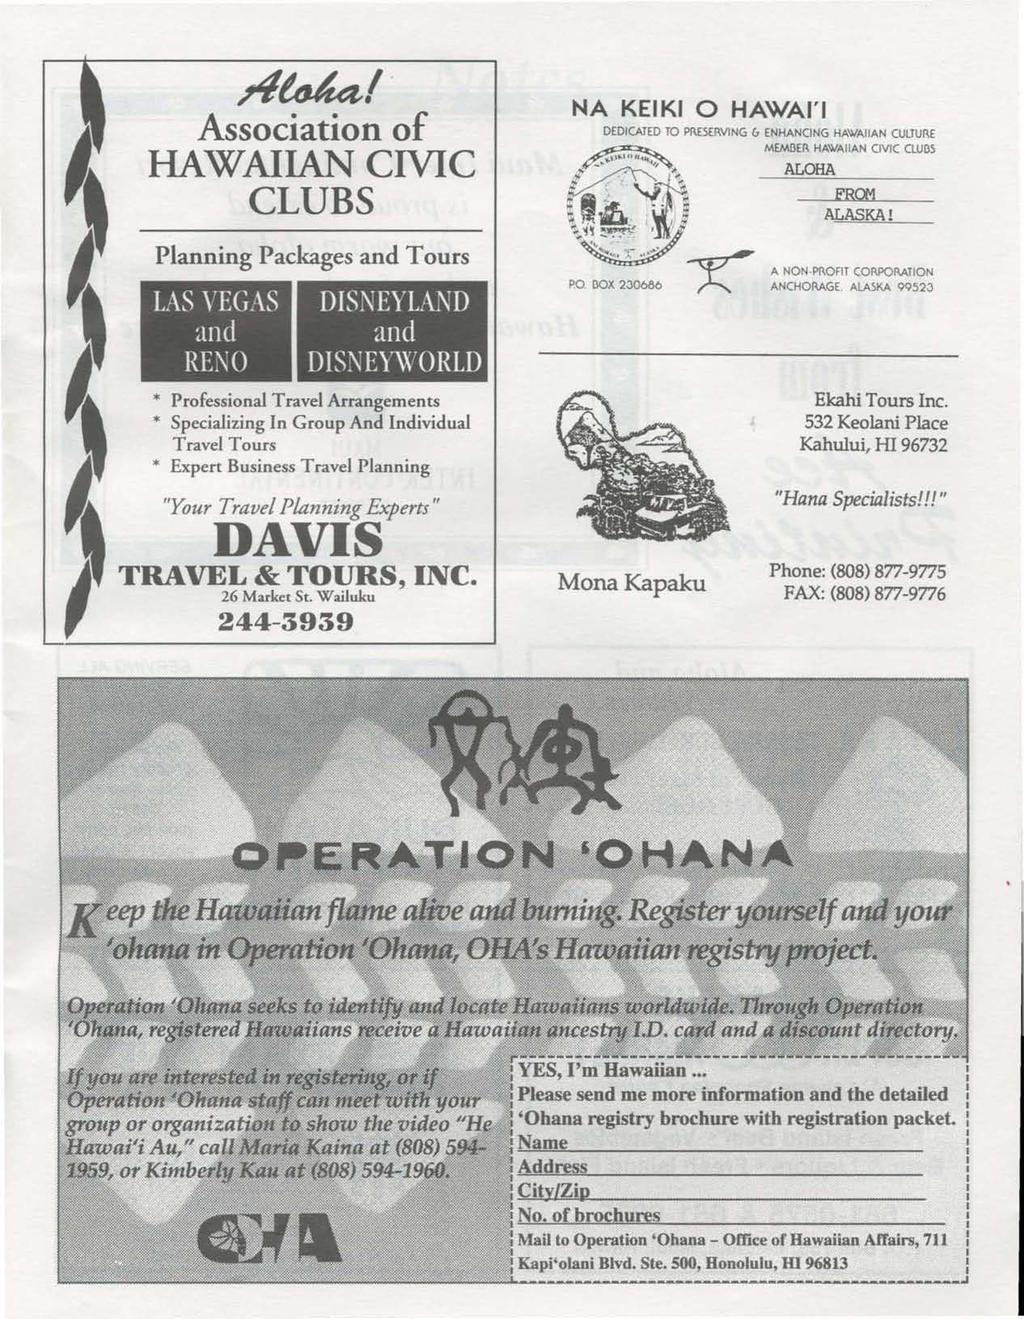 ri~! Association of HAWAIIAN CIVIC CLUBS NA KEIKI 0 HAWAI'I DEDICATED TO PRESERVING & ENHANCING HAWAIIAN CULJURE MEMBER HAWAIIAN CIVIC ouns ALOHA FROM ALASKA!